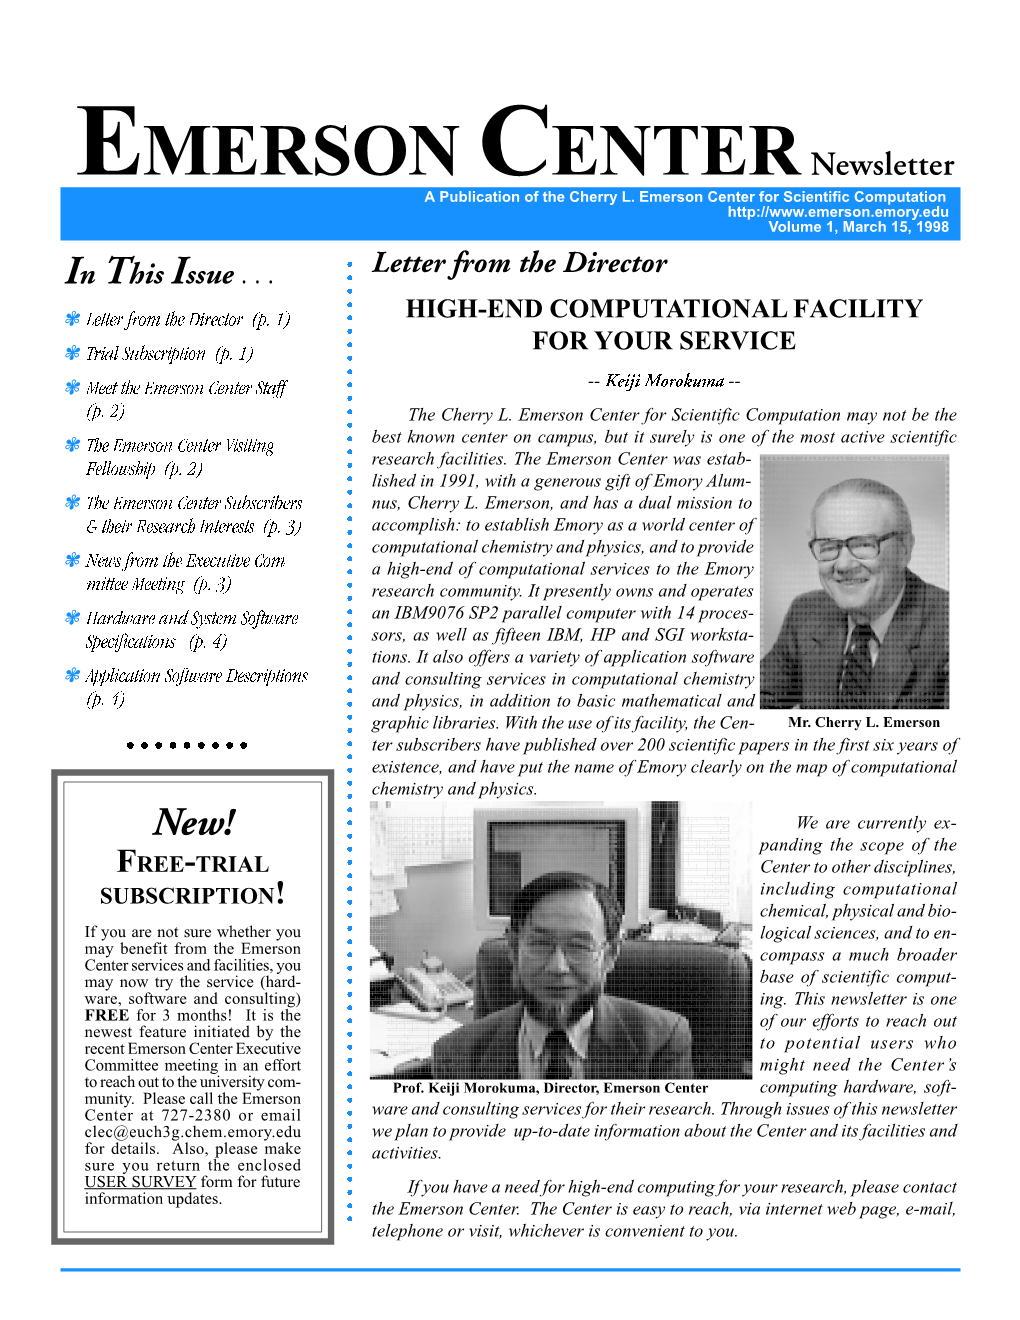 EMERSON CENTER a Publication of the Cherry L